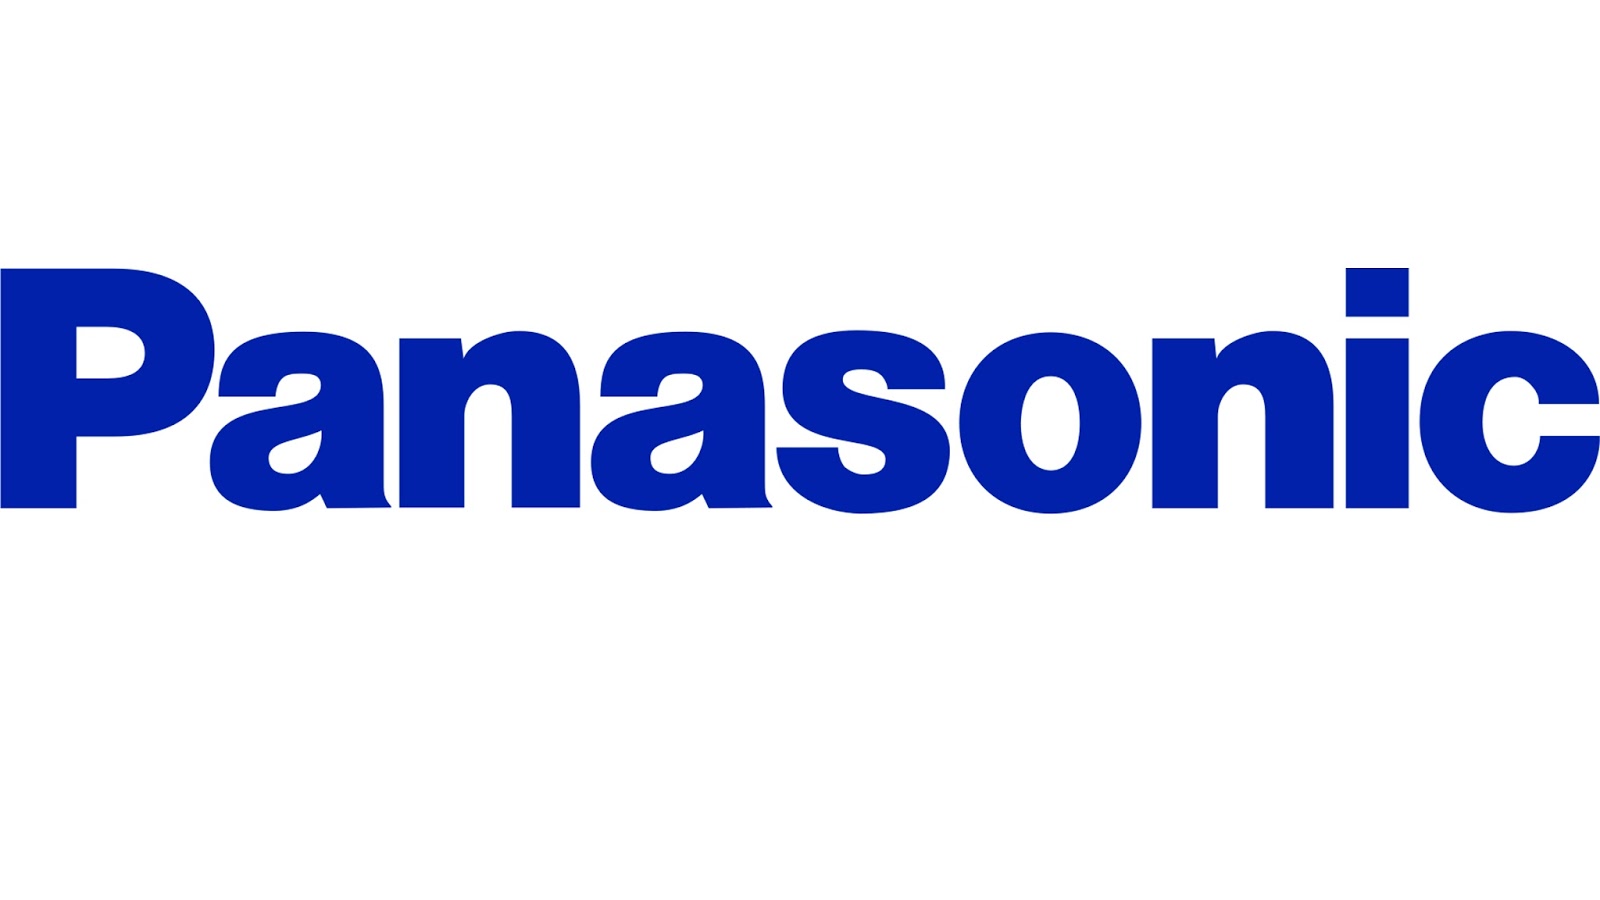 Panasonic Wallpapers